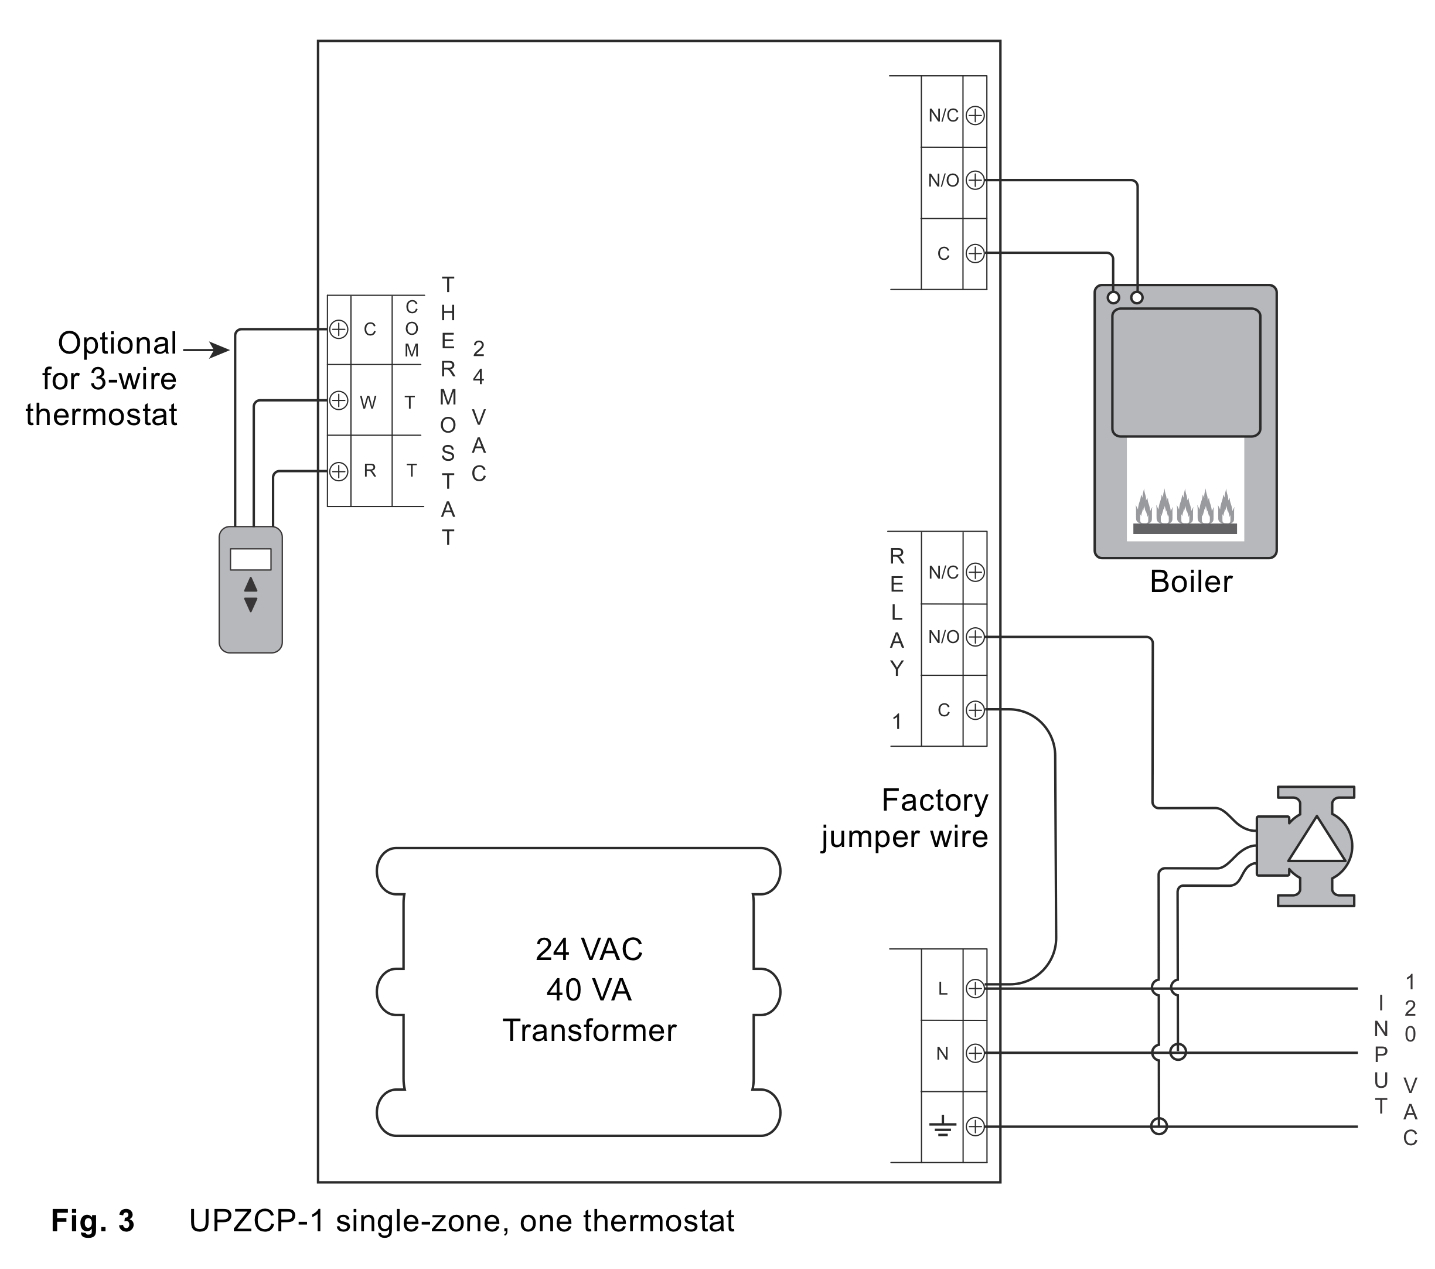 grundfos cu 200 wiring diagram inspirational grundfos pump motor wiring diagrams library wiring diagrams